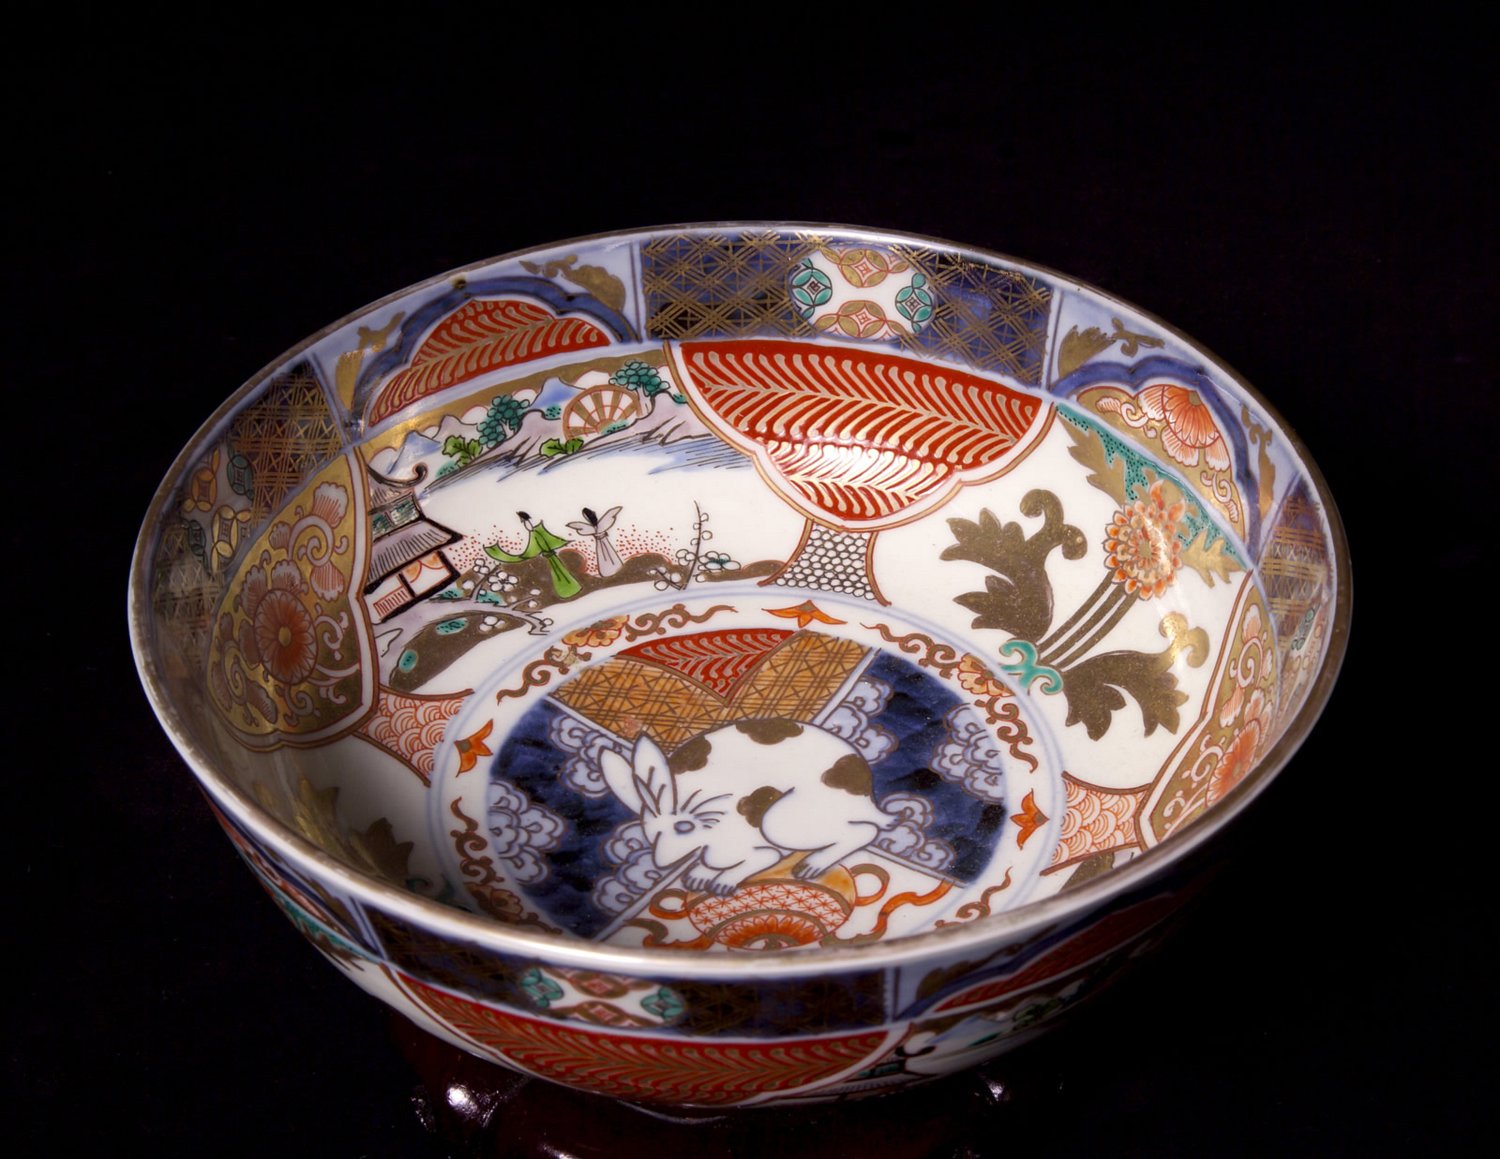 Pair of Japanese Imari Bowls